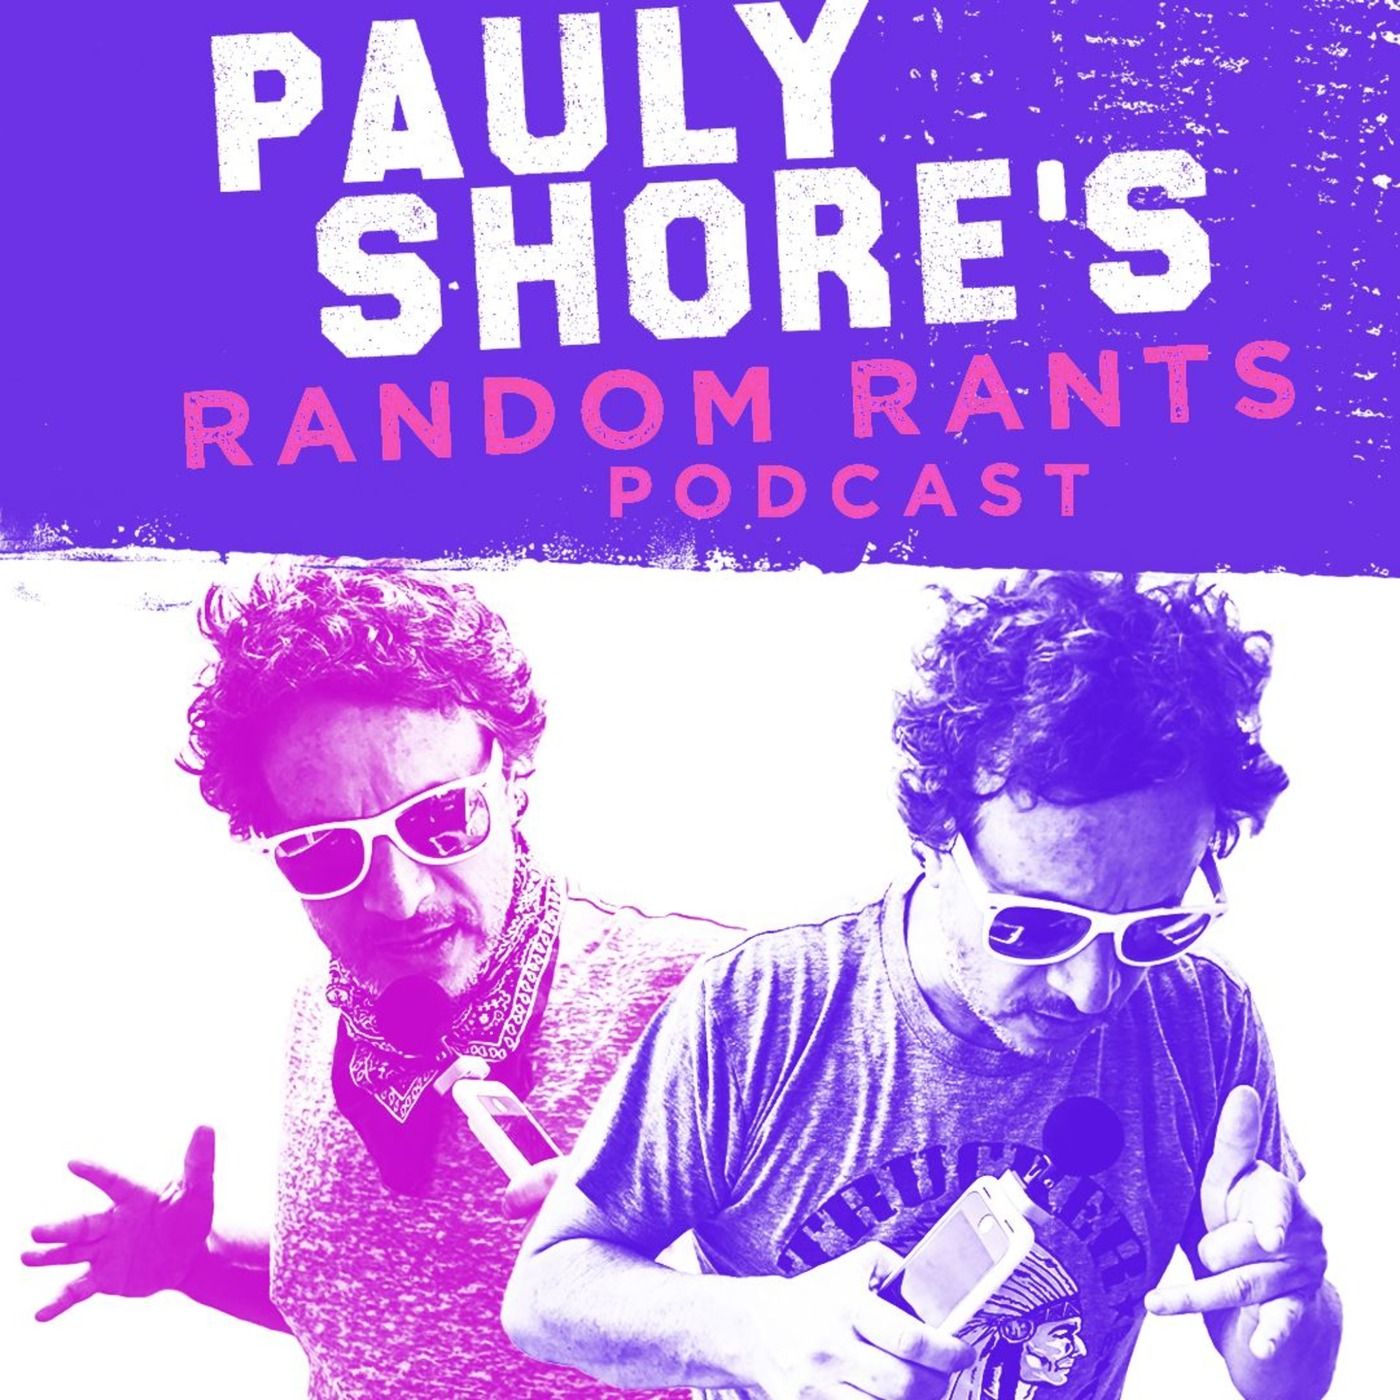 "Vote For The Rock in 2020!" - Pauly Shore's Random Rants - 102